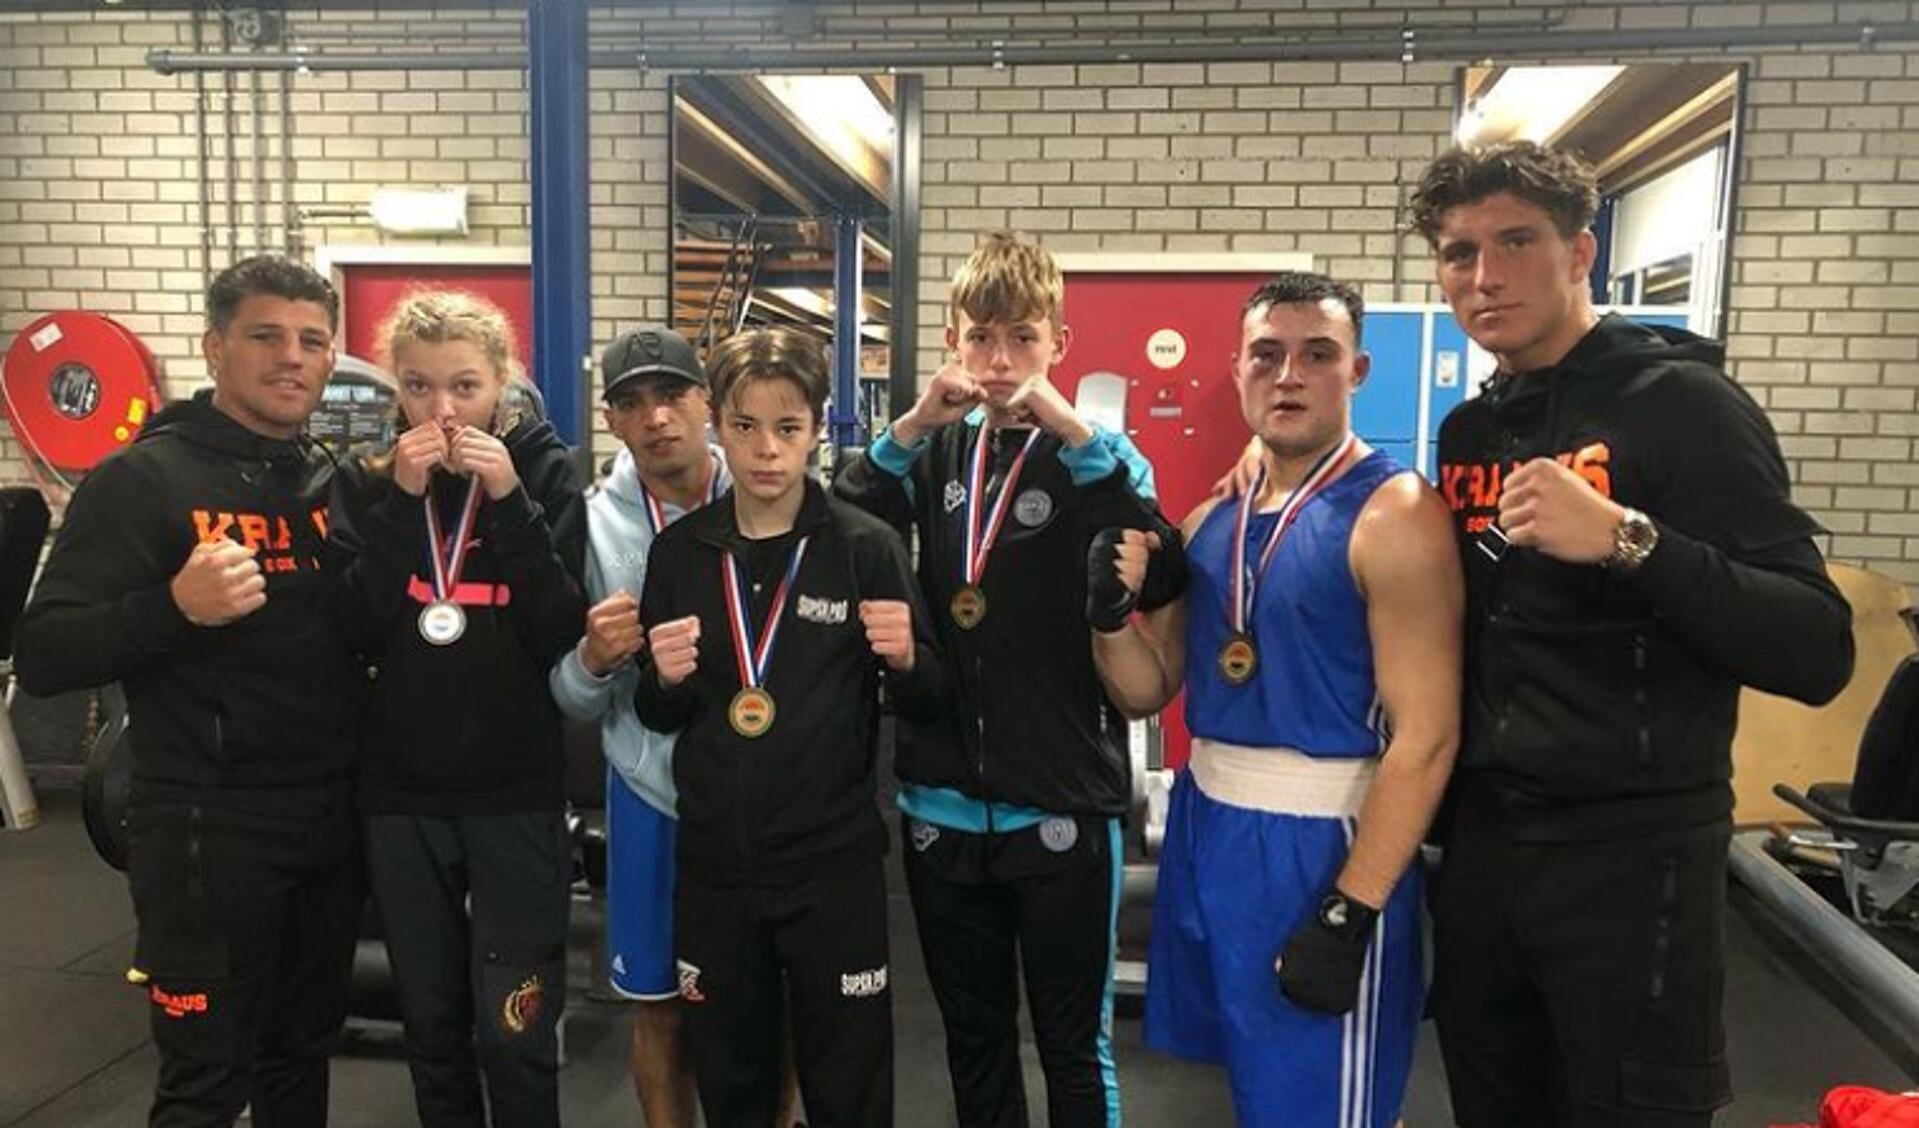 Team Kraus succesvol bij Zuid Nederlandse Kampioenschappen boksen. (Foto: Team Kraus Instagram)